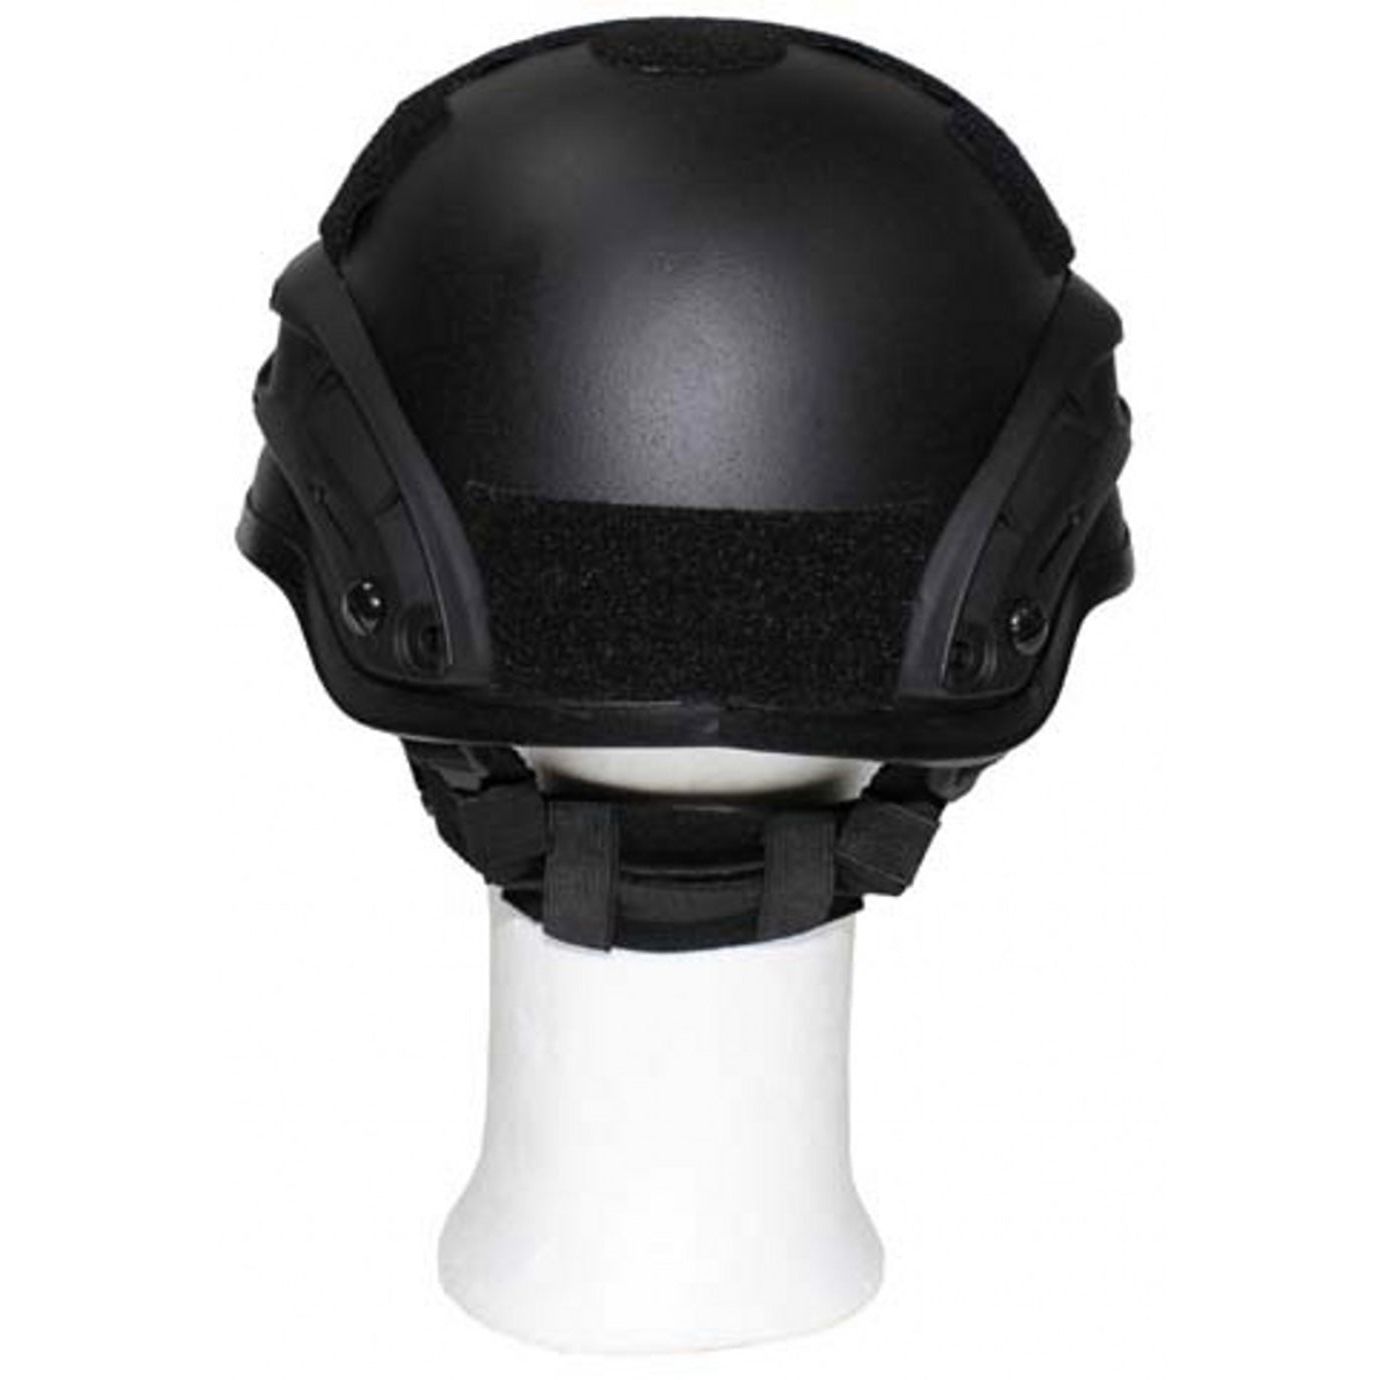 CEST® MICH helmet ABS plastic